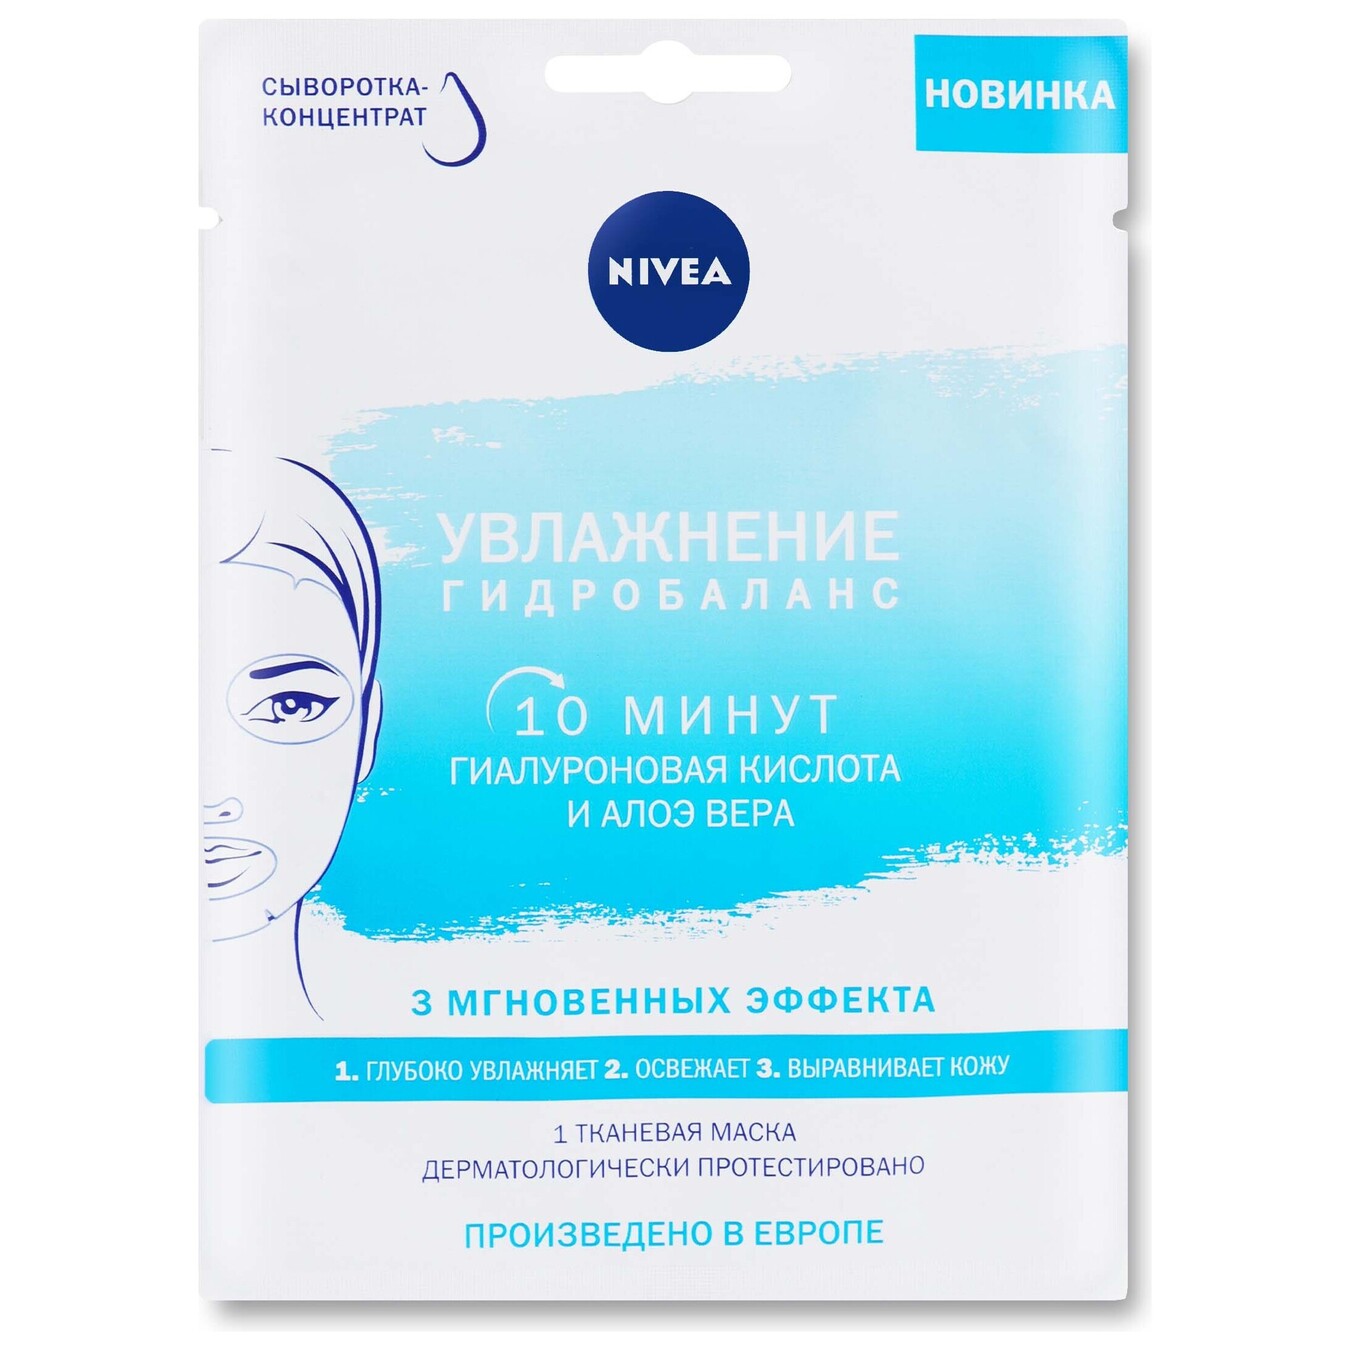 Fabric mask Nivea moisturizing hydrobalance 28g